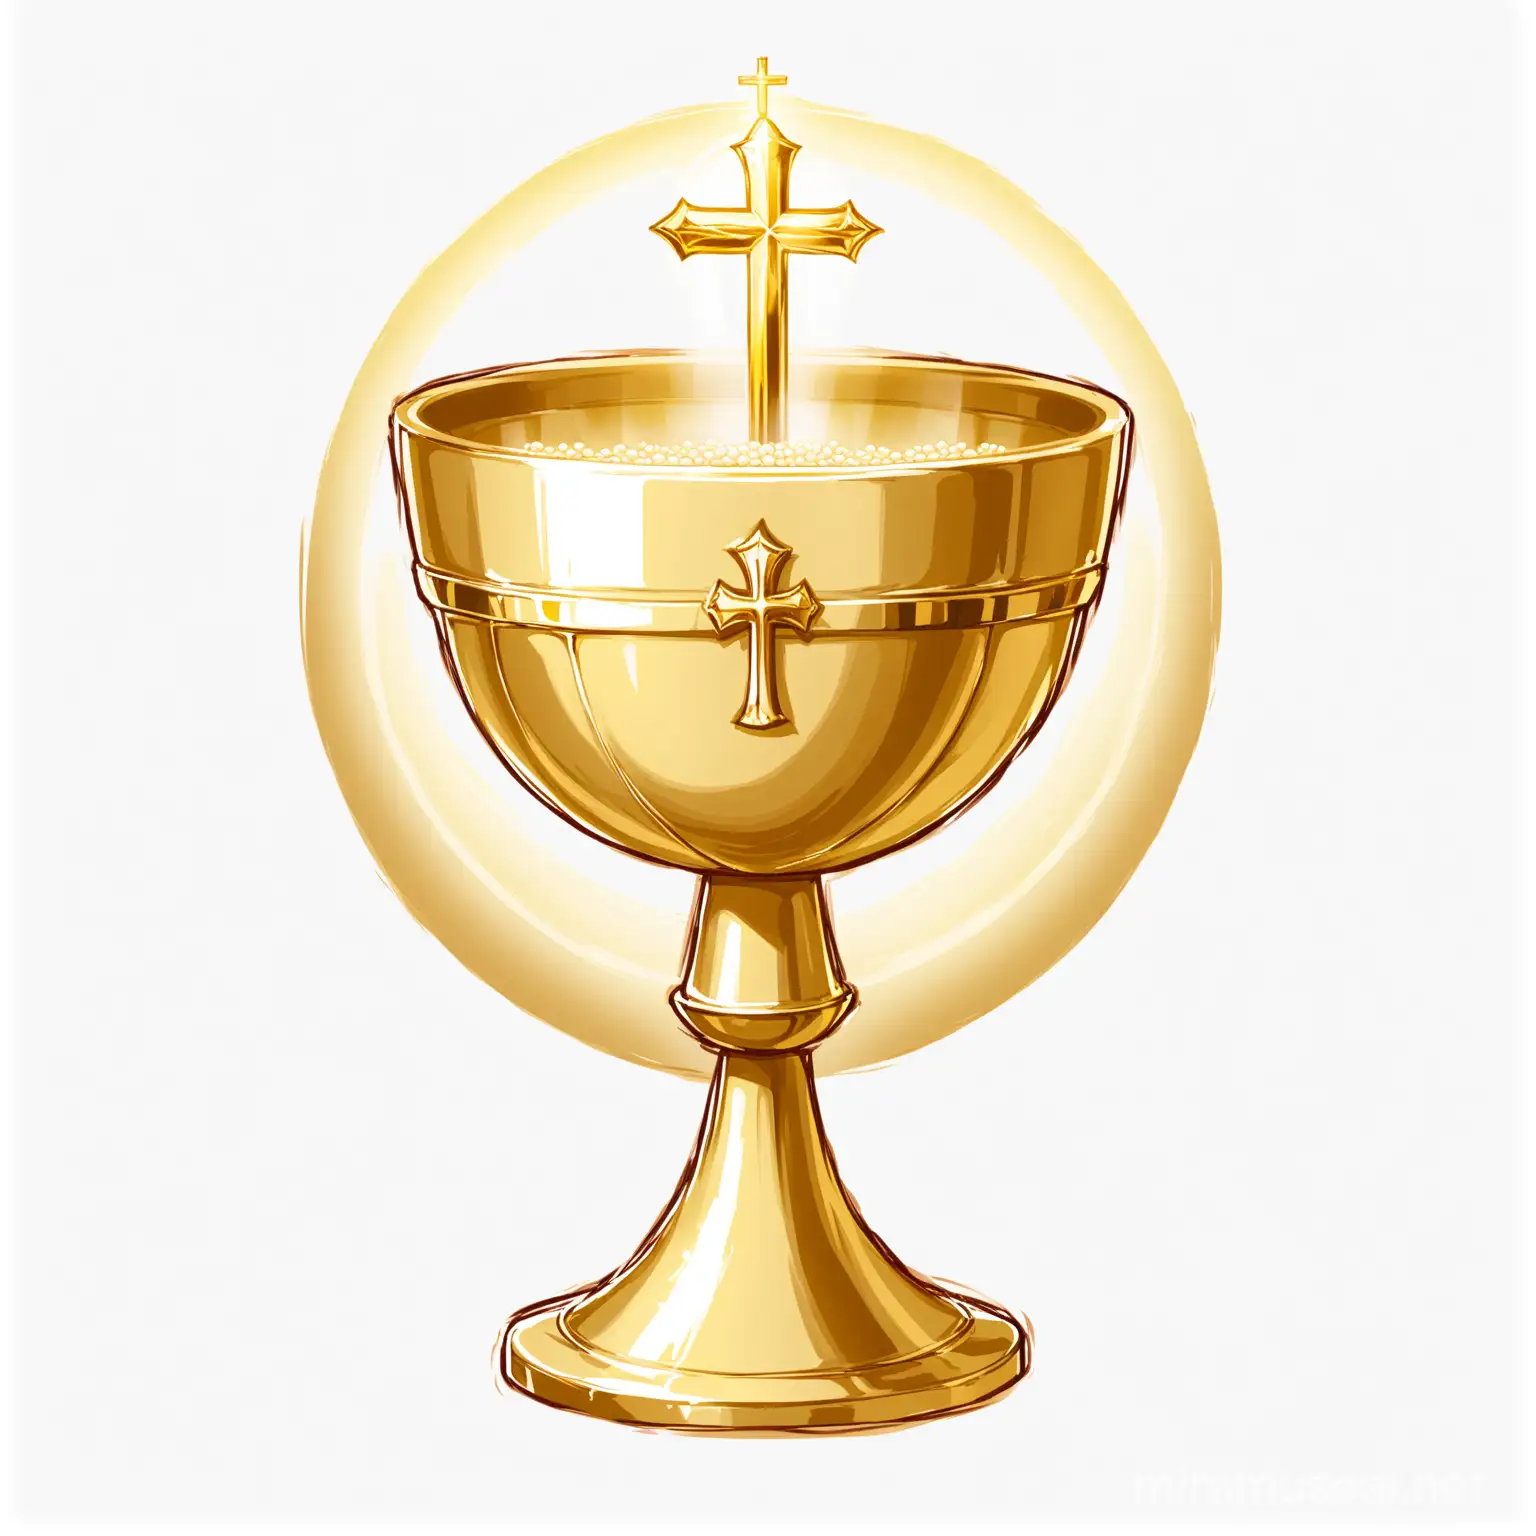 gold chalice communion, ihs, eucharist, transparent background

